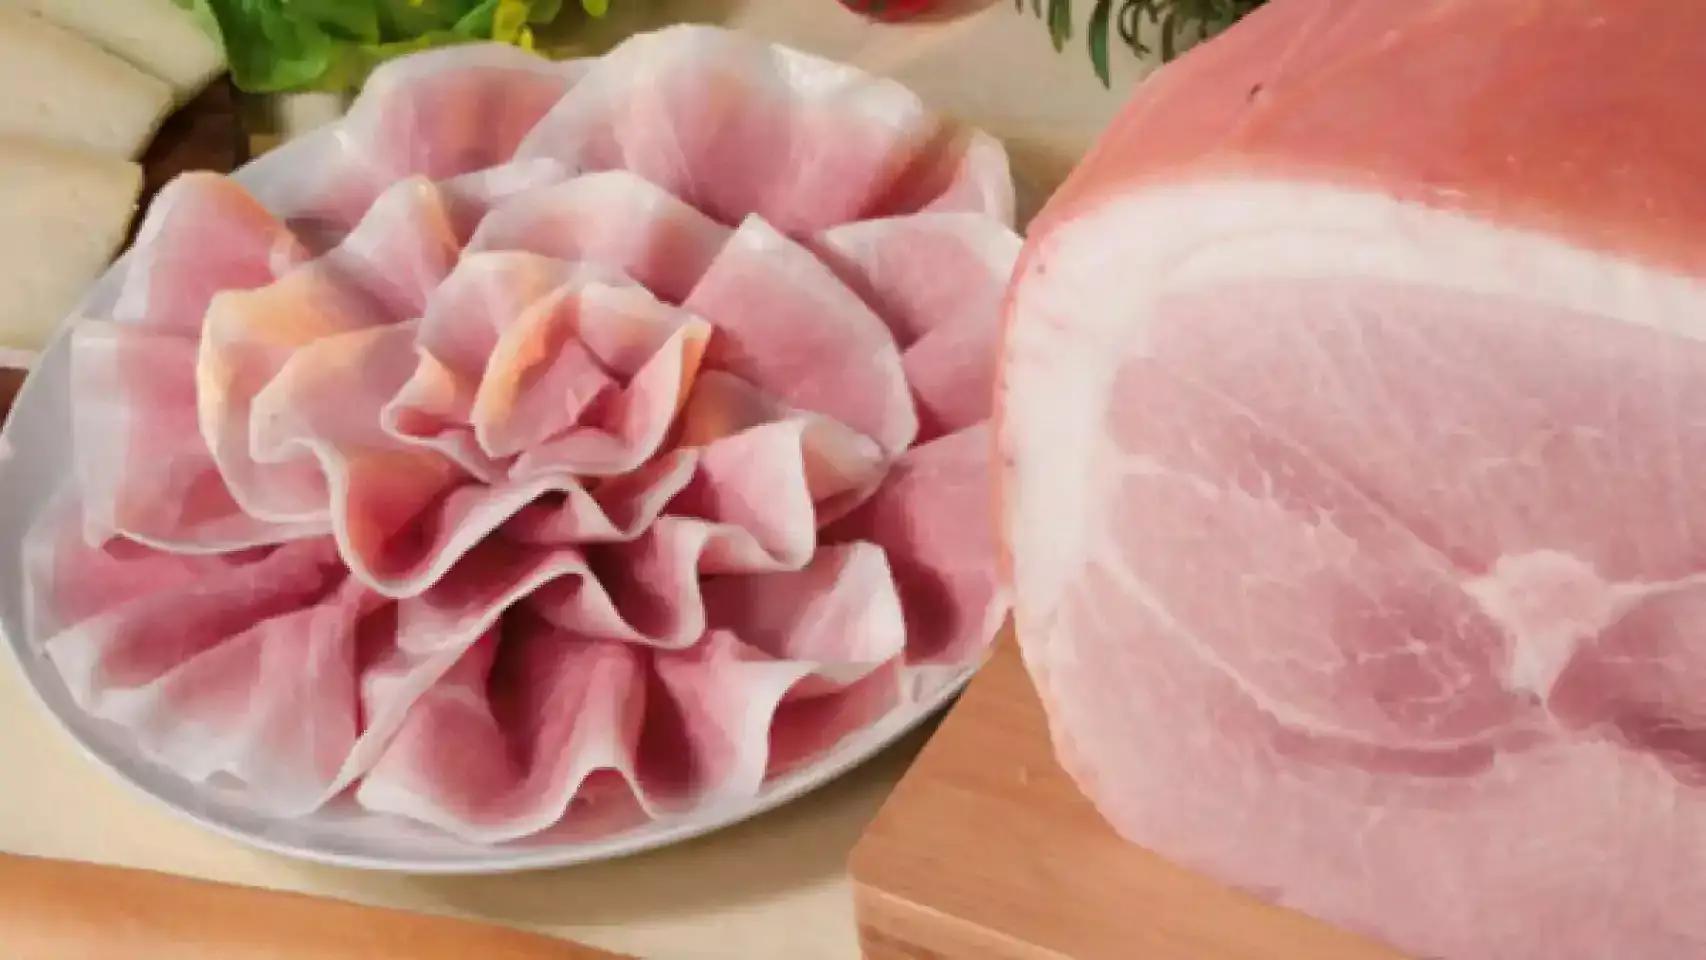 York ham or cooked ham